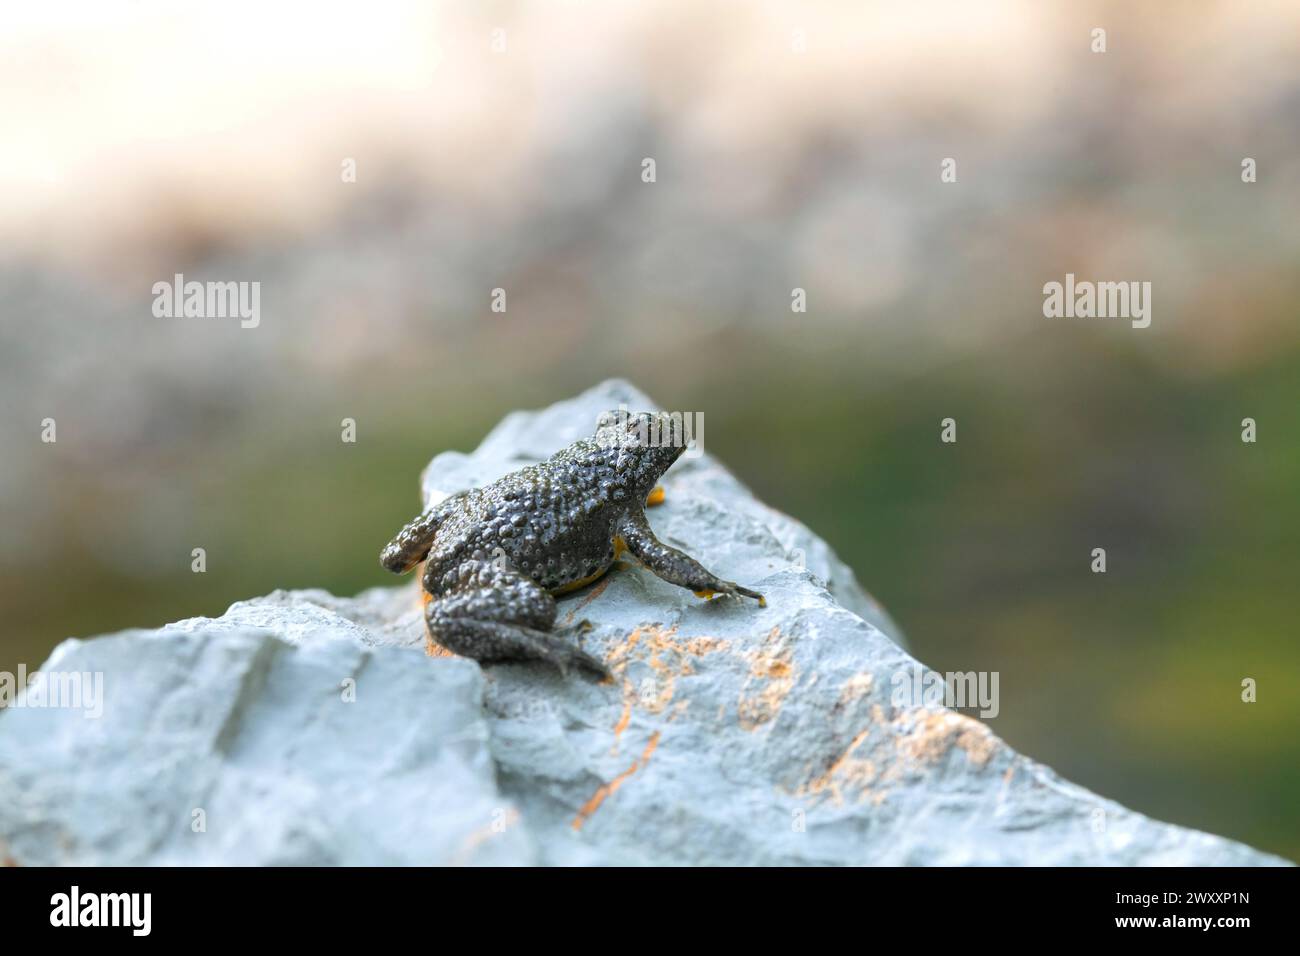 Yellow-bellied toad (Bombina variegata), sitting on stone, Stolberg, Germany Stock Photo